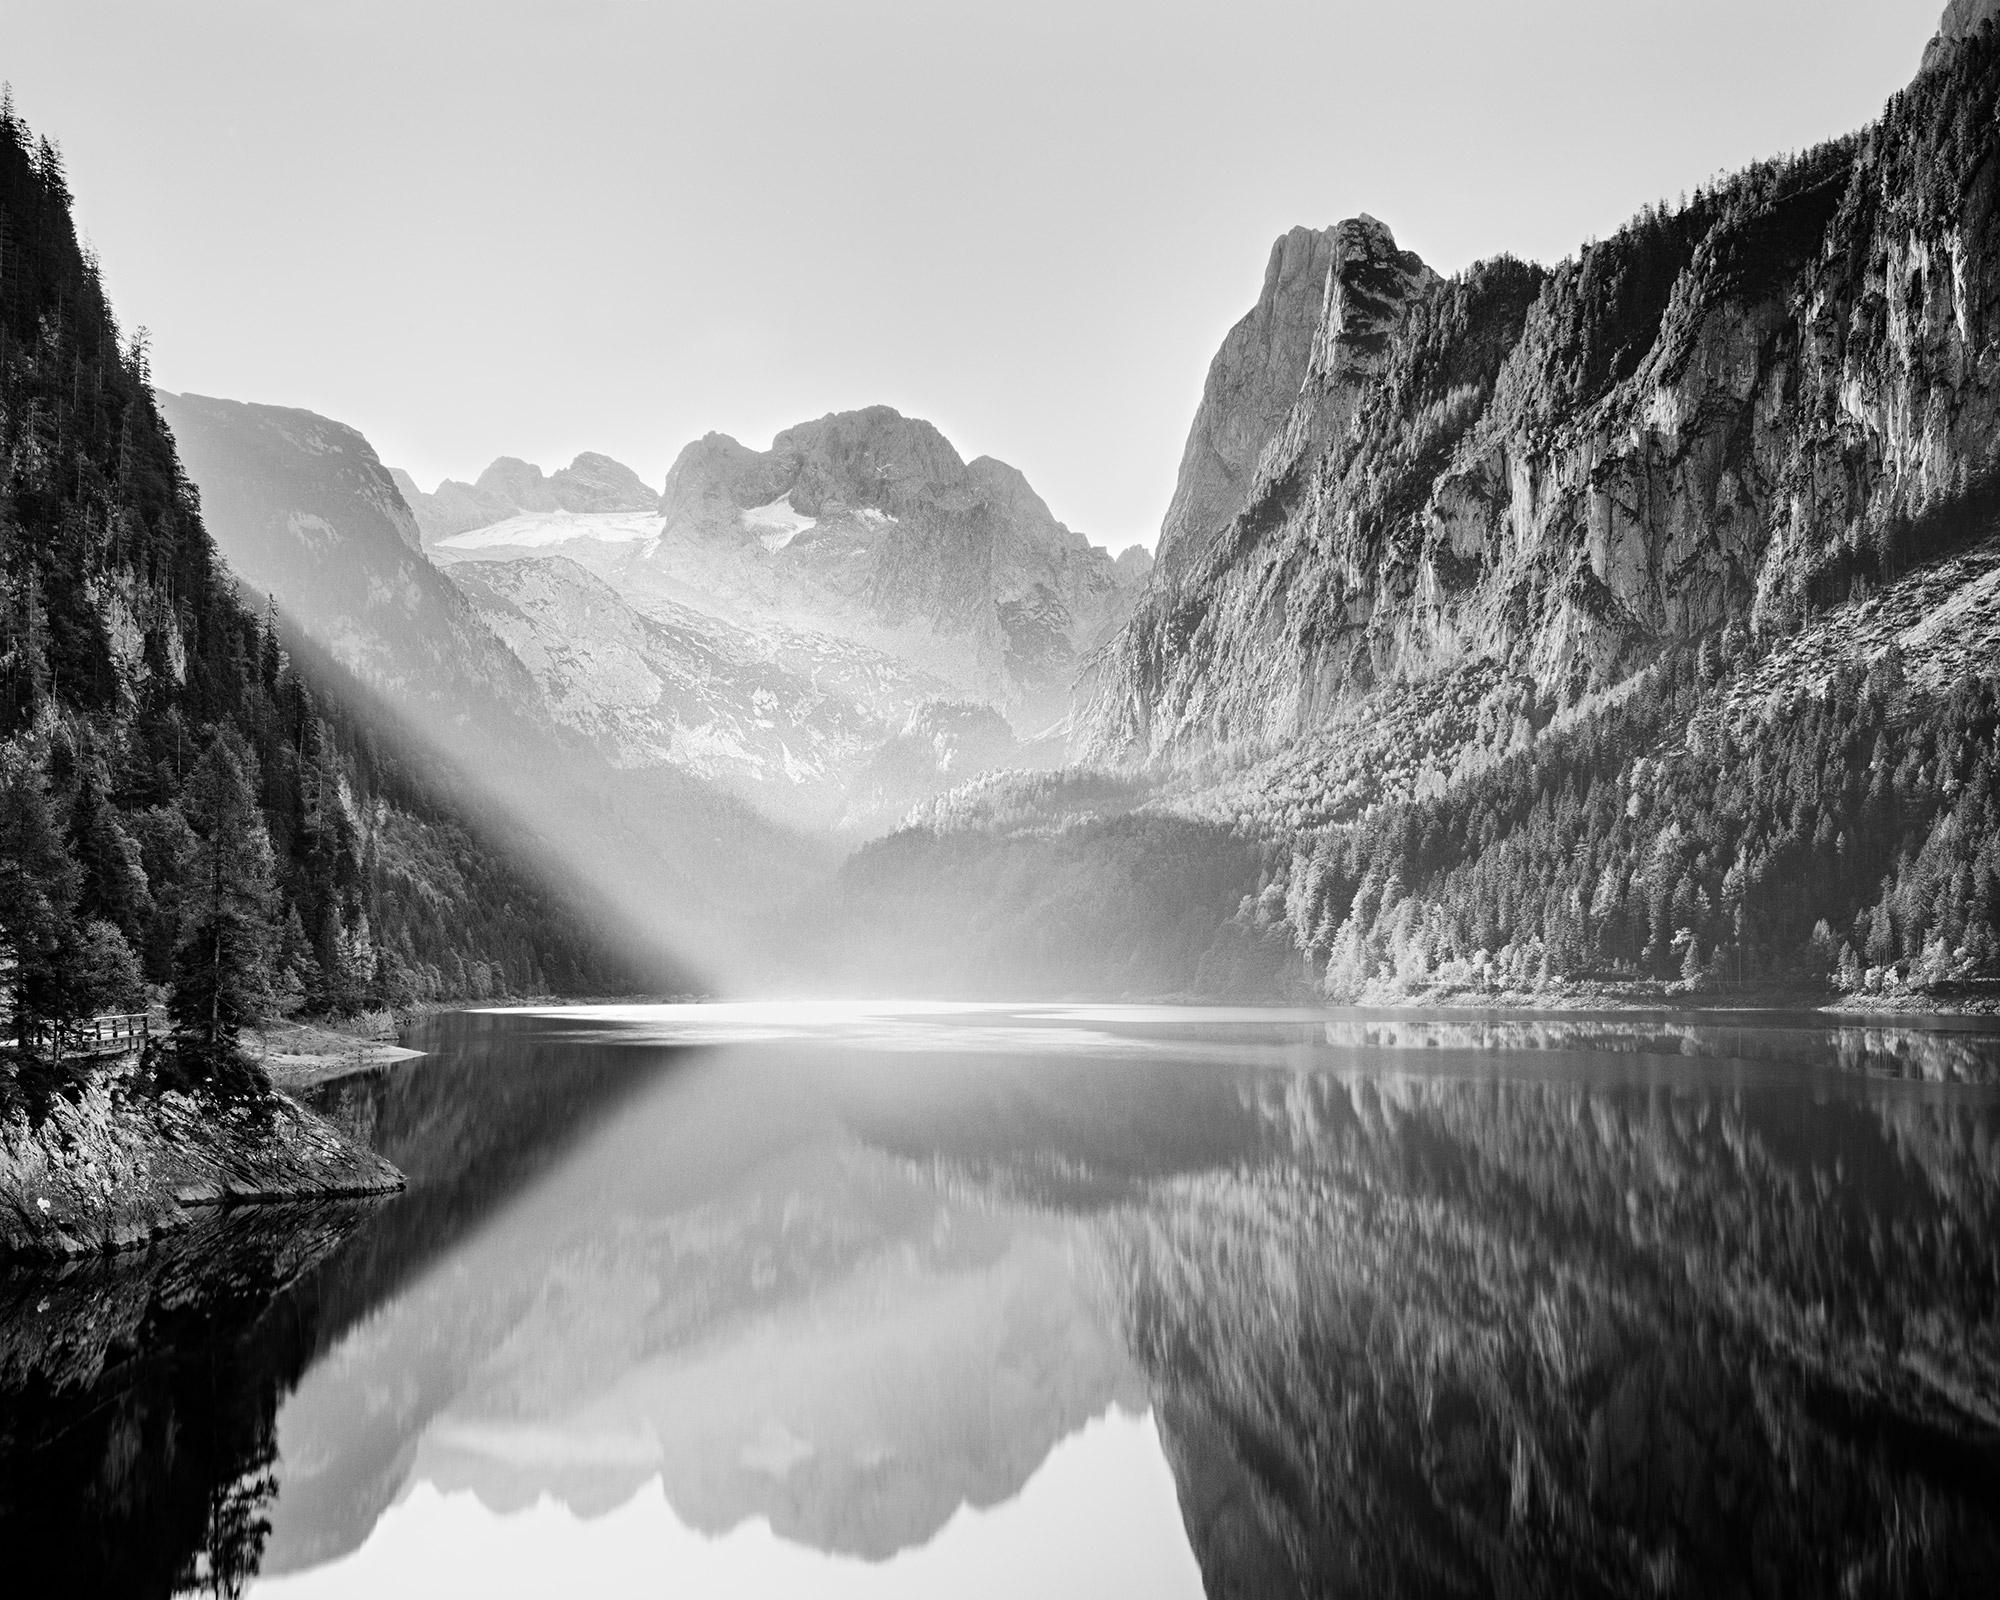 Gerald Berghammer Landscape Photograph - Illumination, mountain lake, black and white long exposure landscape photography